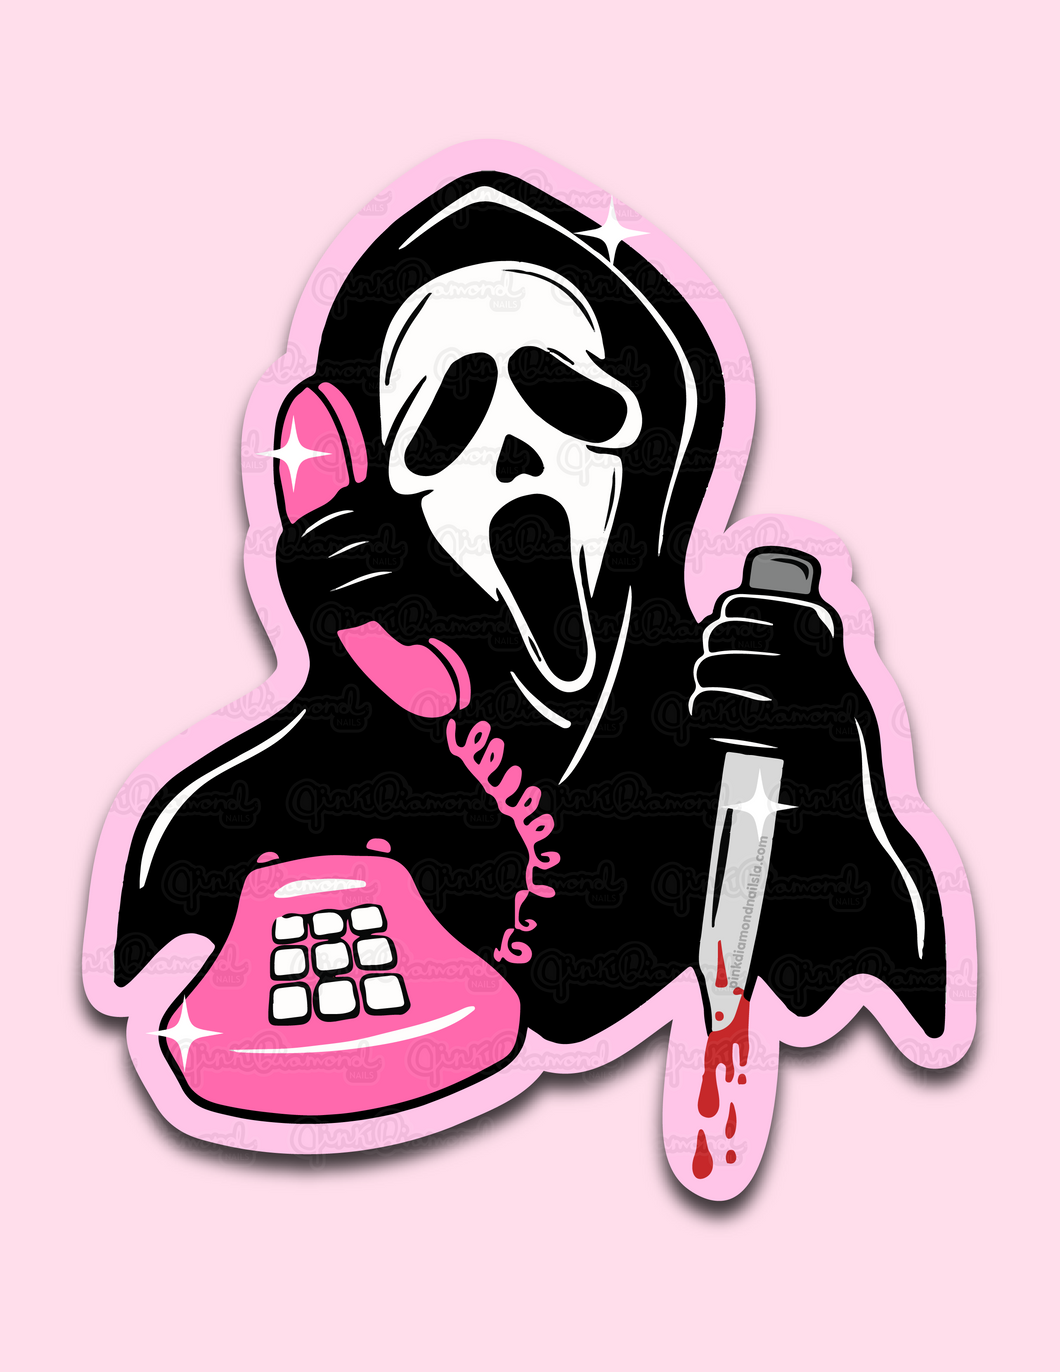 Scream / Ghost face pink phone - Vinyl sticker